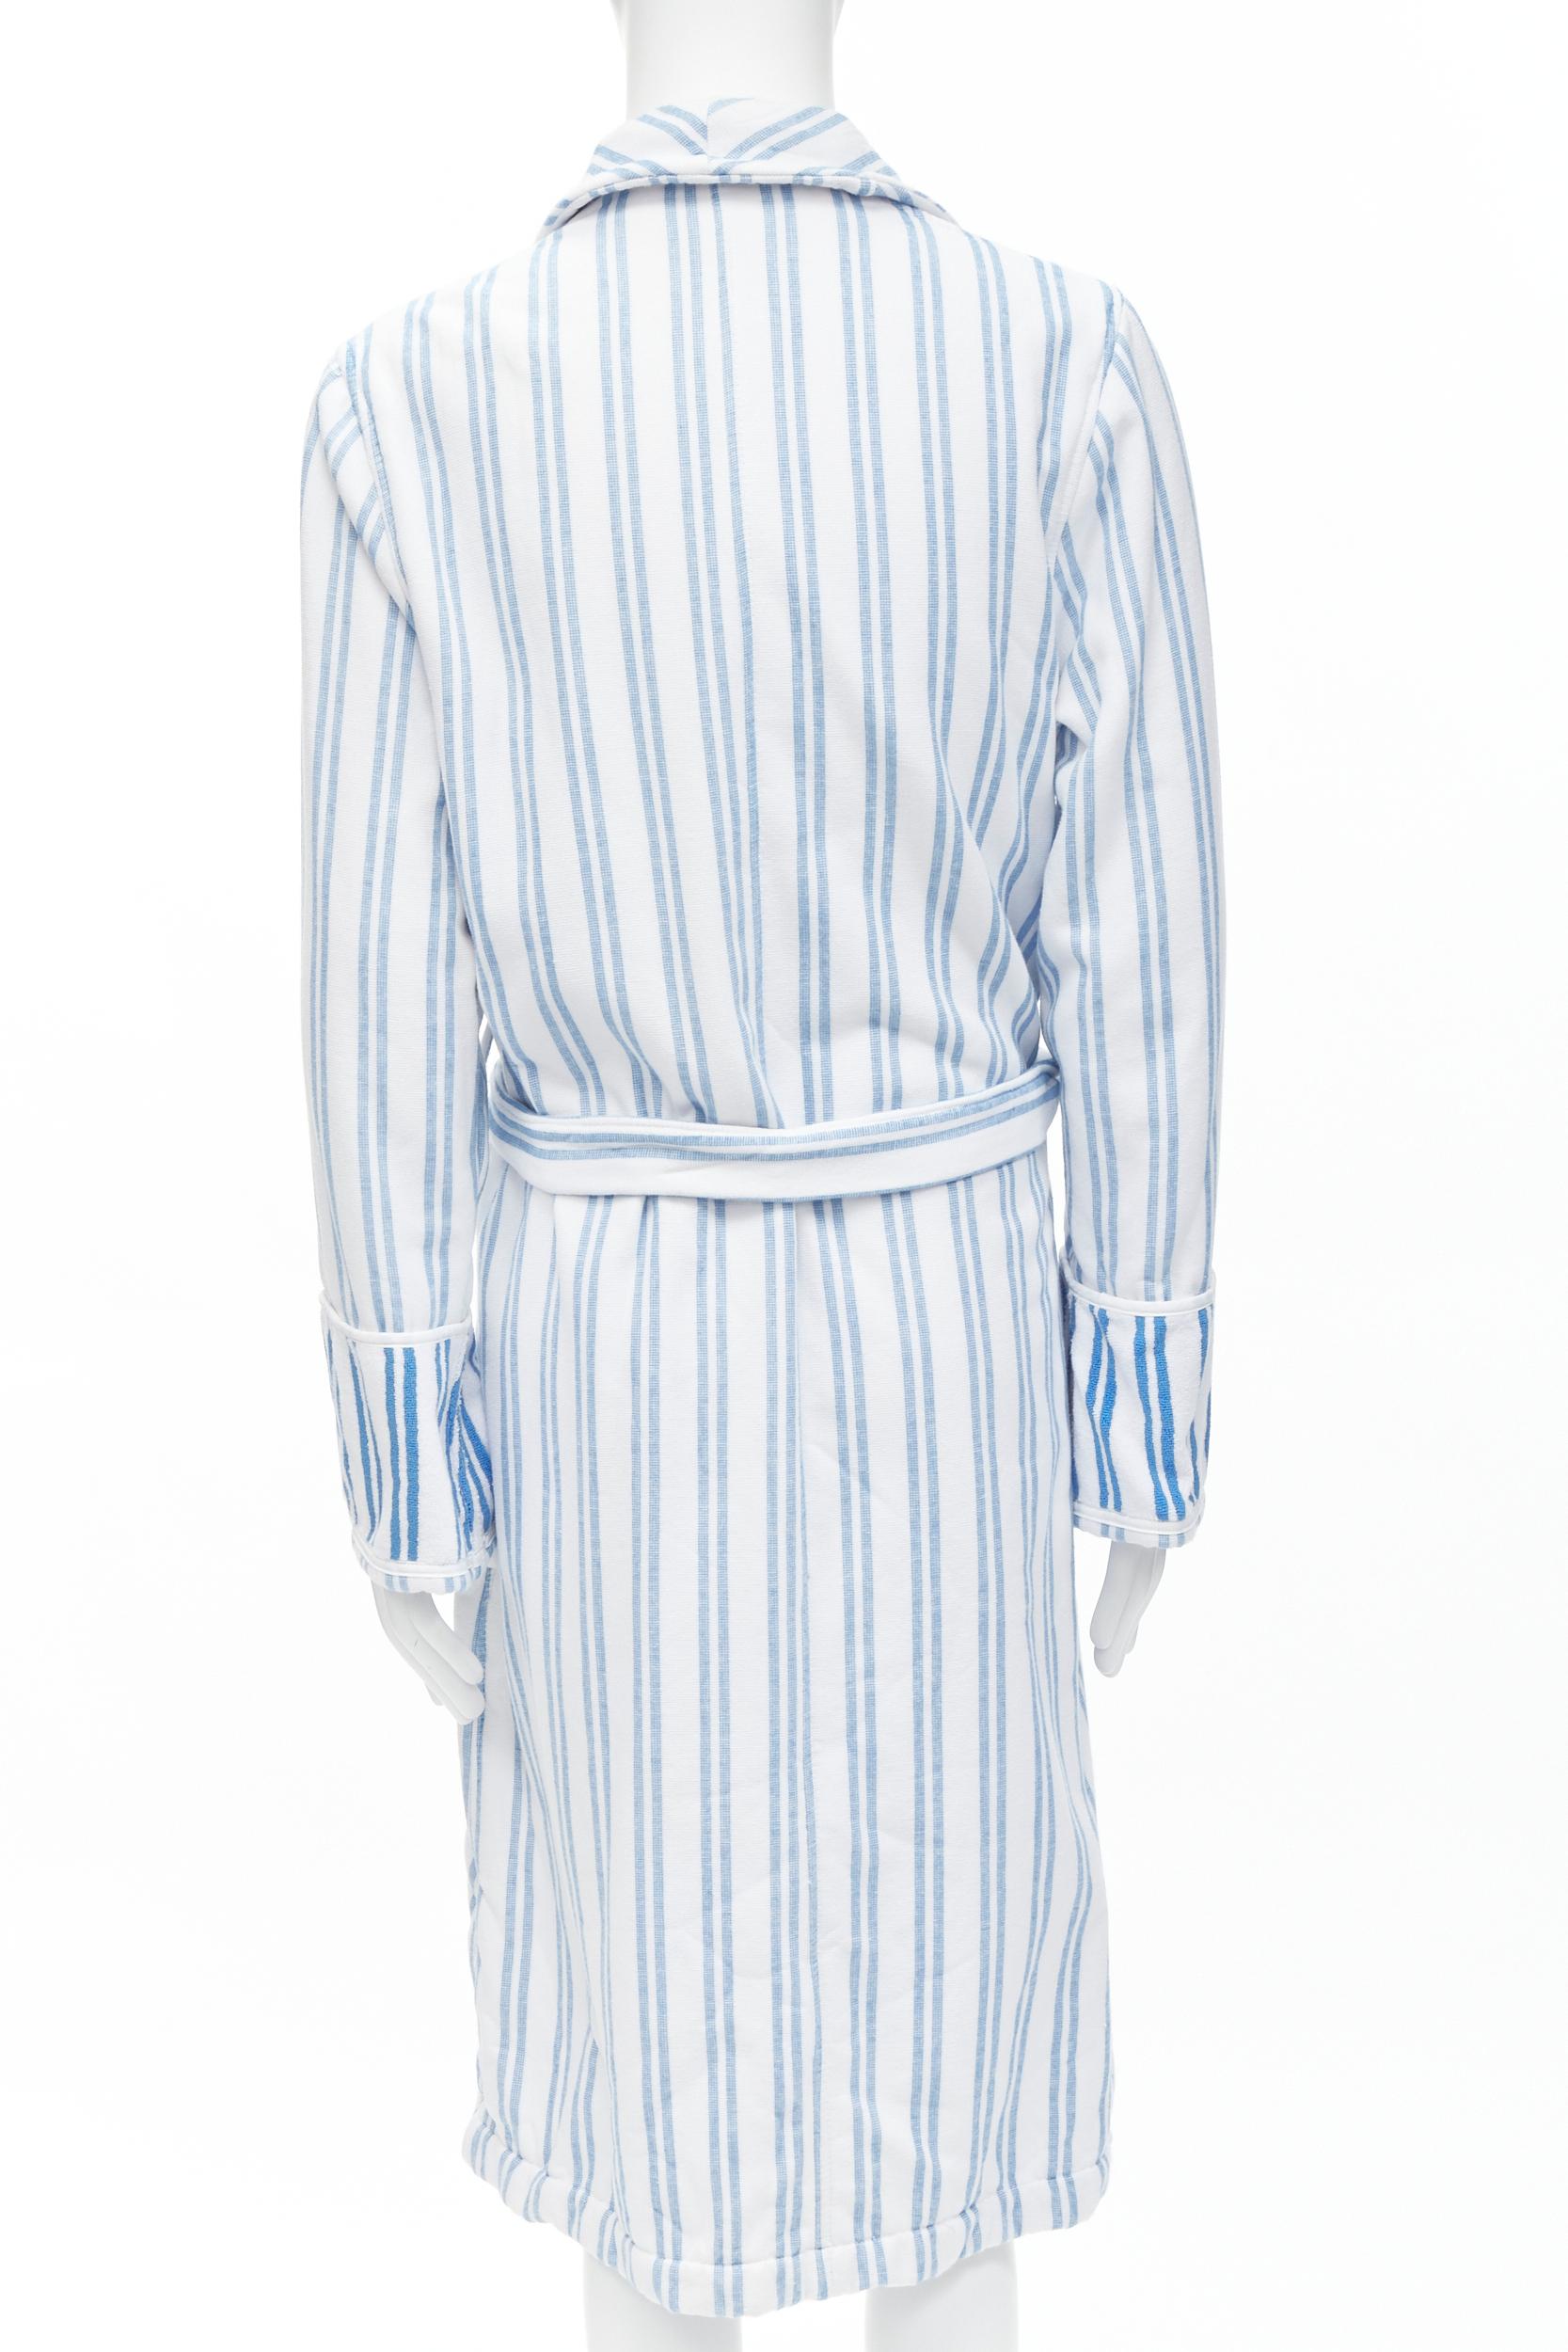 BALENCIAGA Demna Resort blue white striped belted bathrobe coat FR42 L Rihanna 3